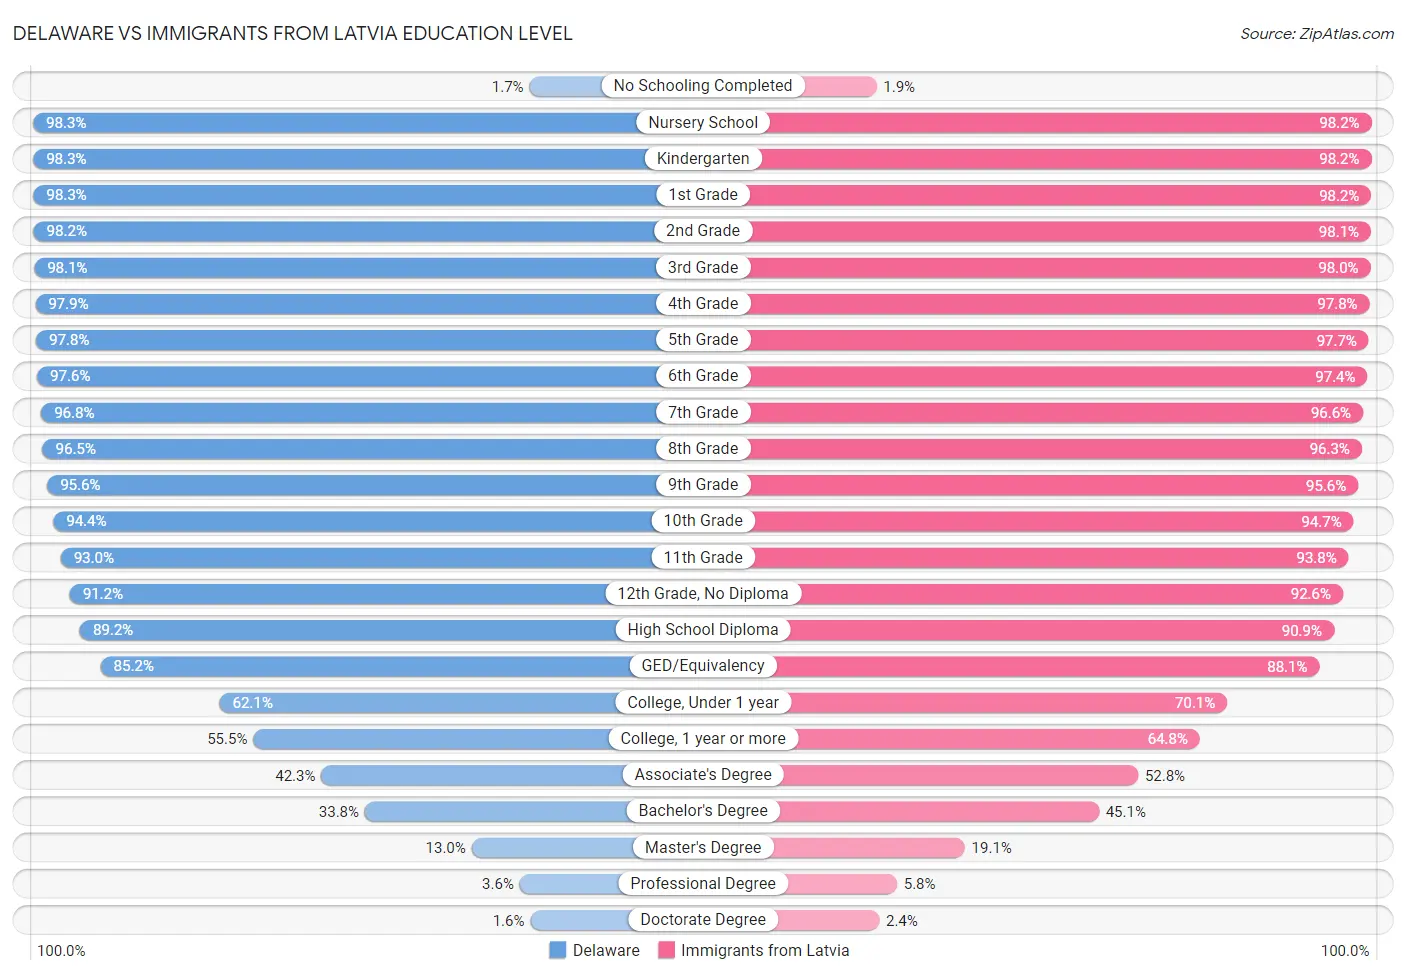 Delaware vs Immigrants from Latvia Education Level